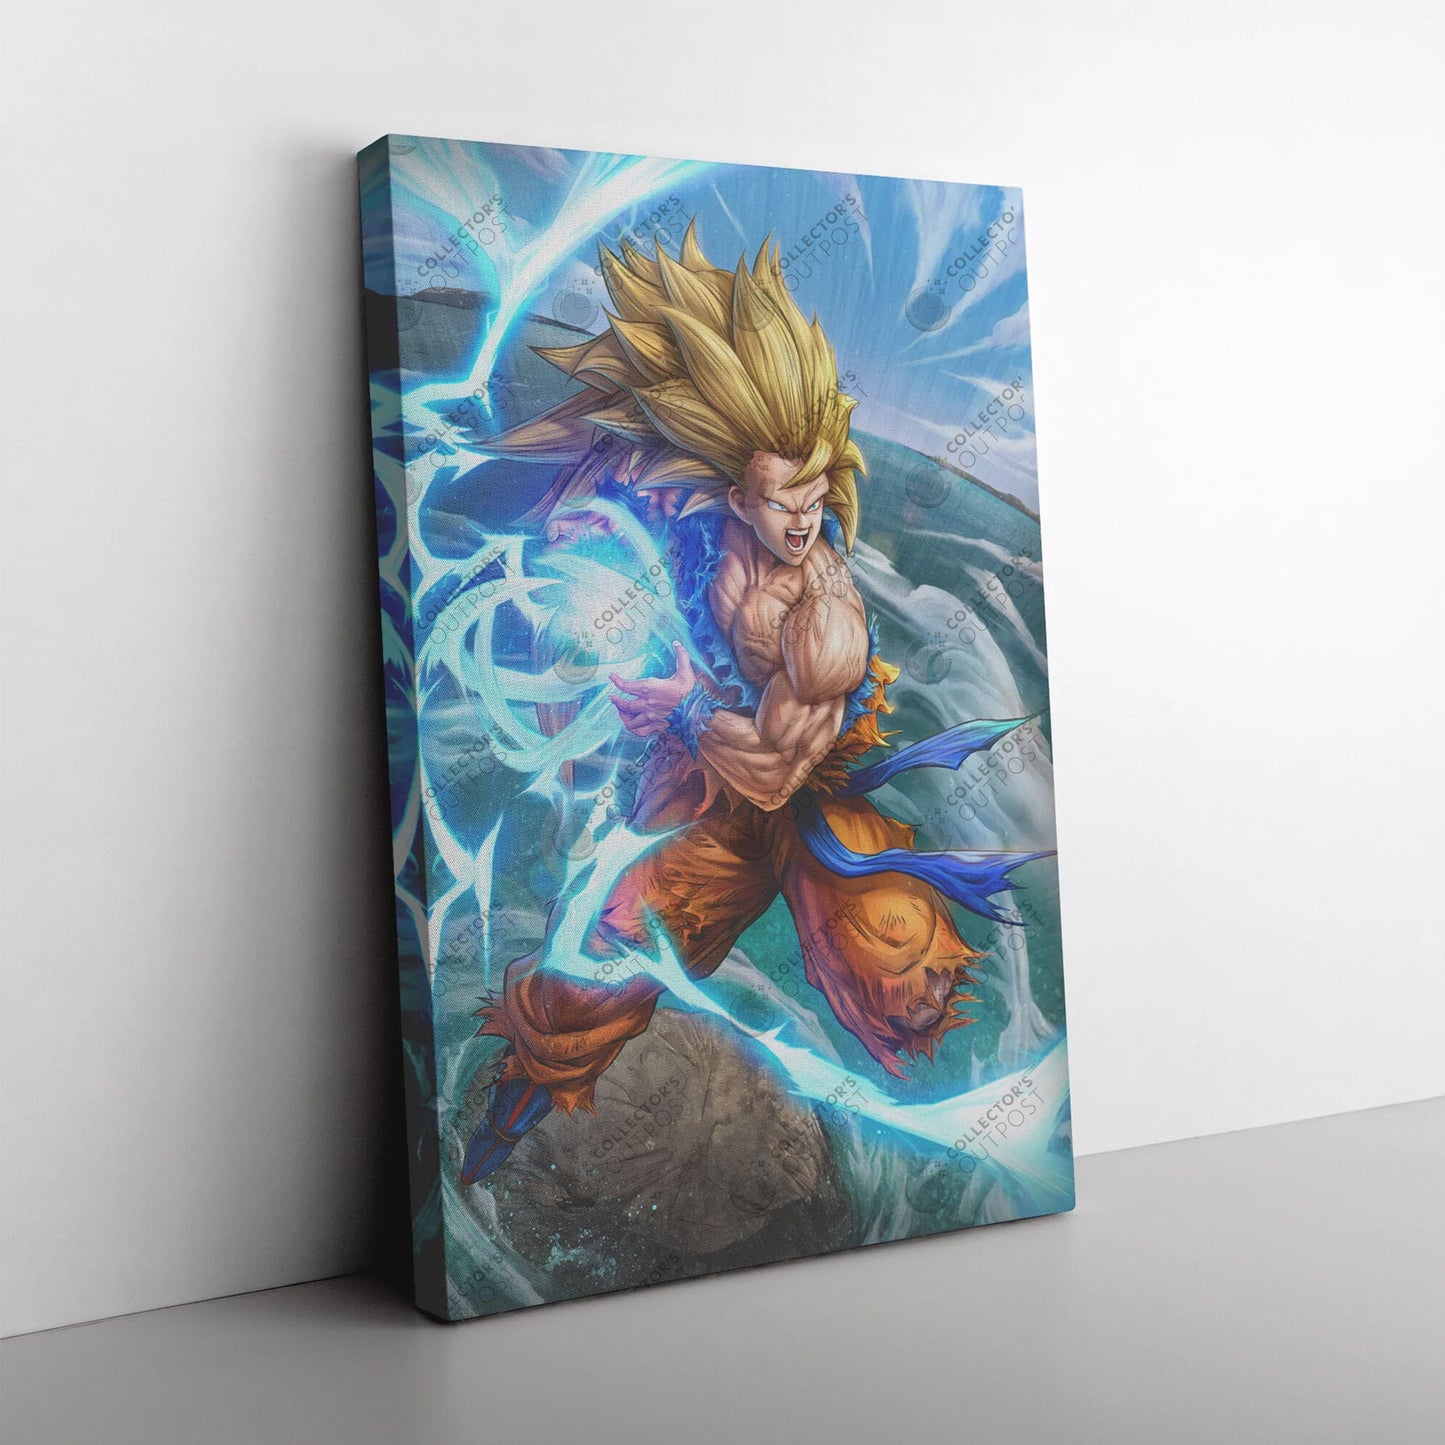 Super Saiyan 3 Son Goku "Growing Strength" (Dragon Ball Z) Premium Art Print